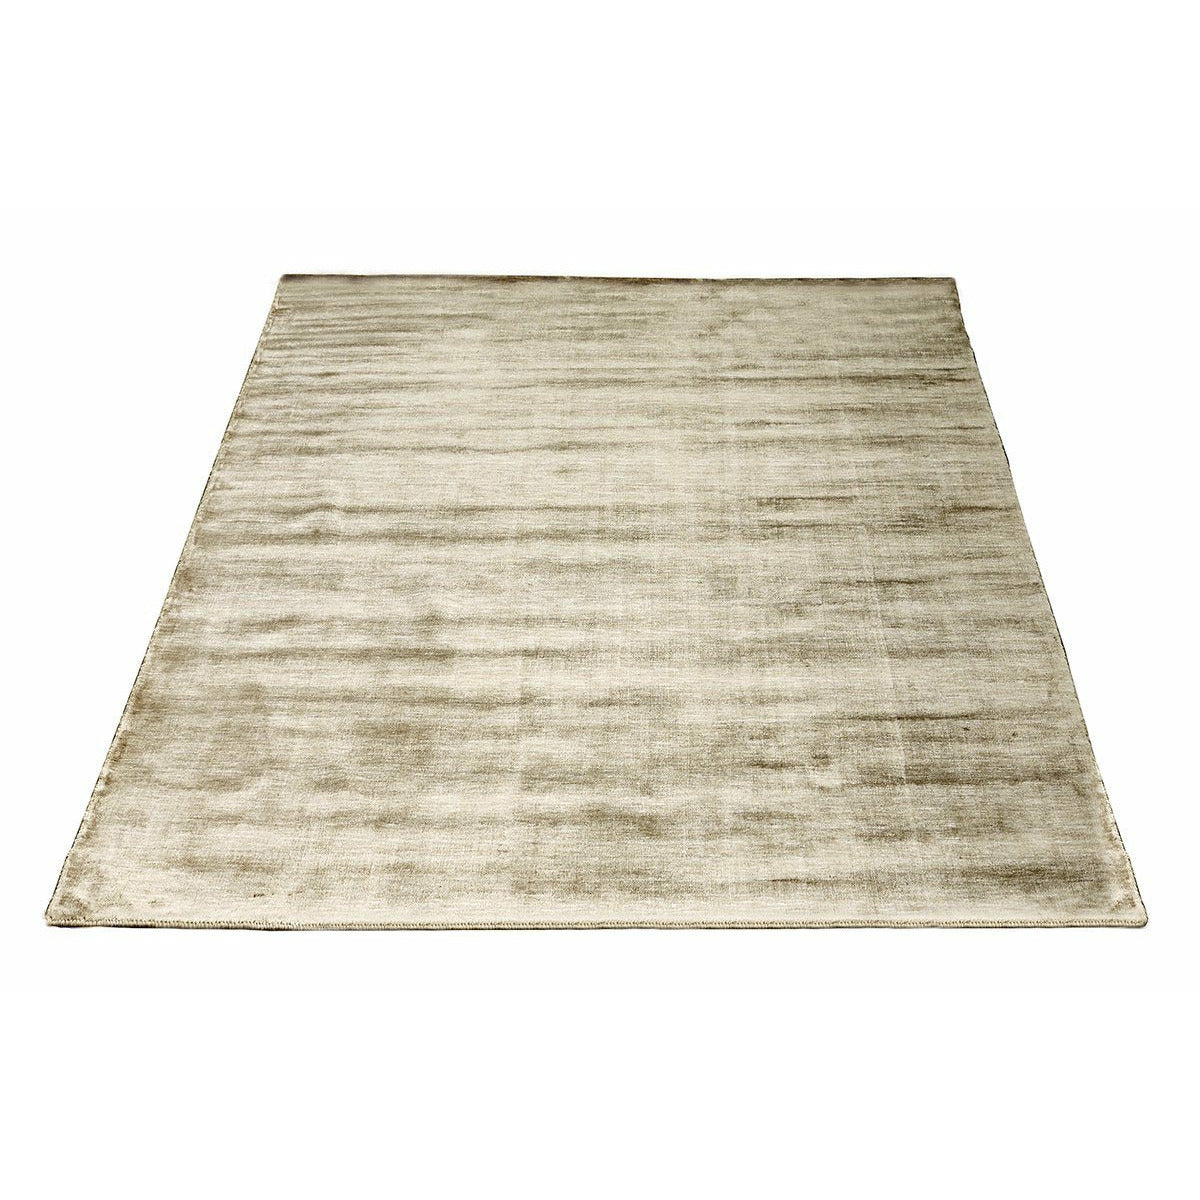 Massimo Bambu -mattan ljusbrun, 200x300 cm